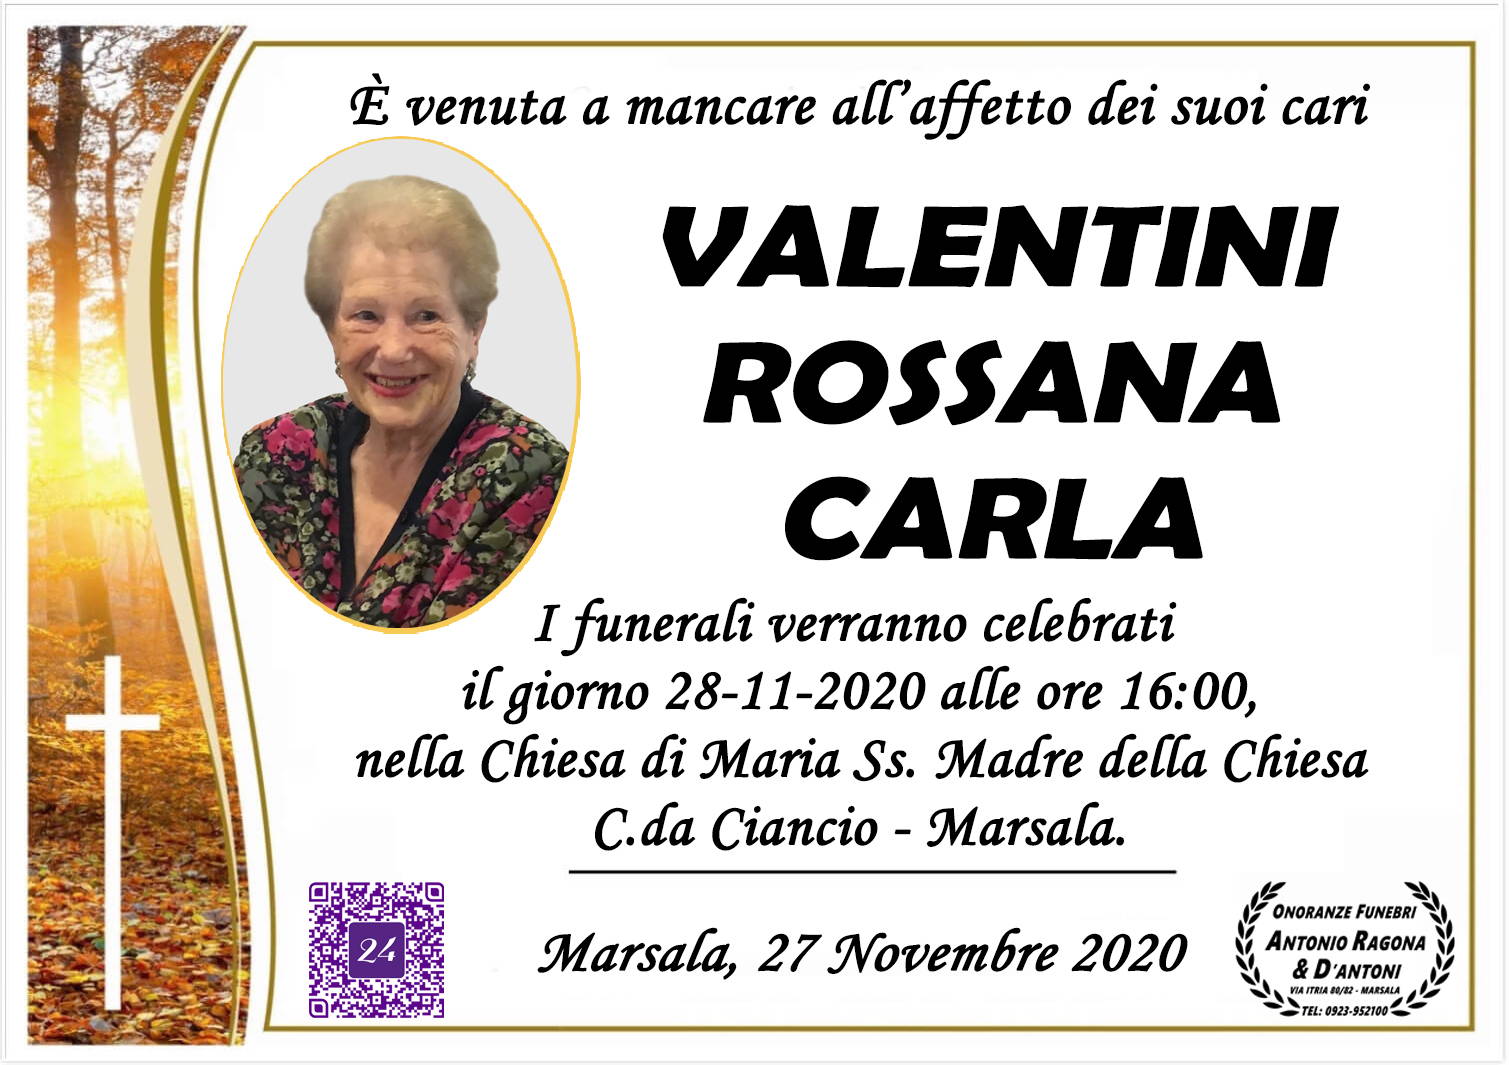 Rossana Carla Valentini